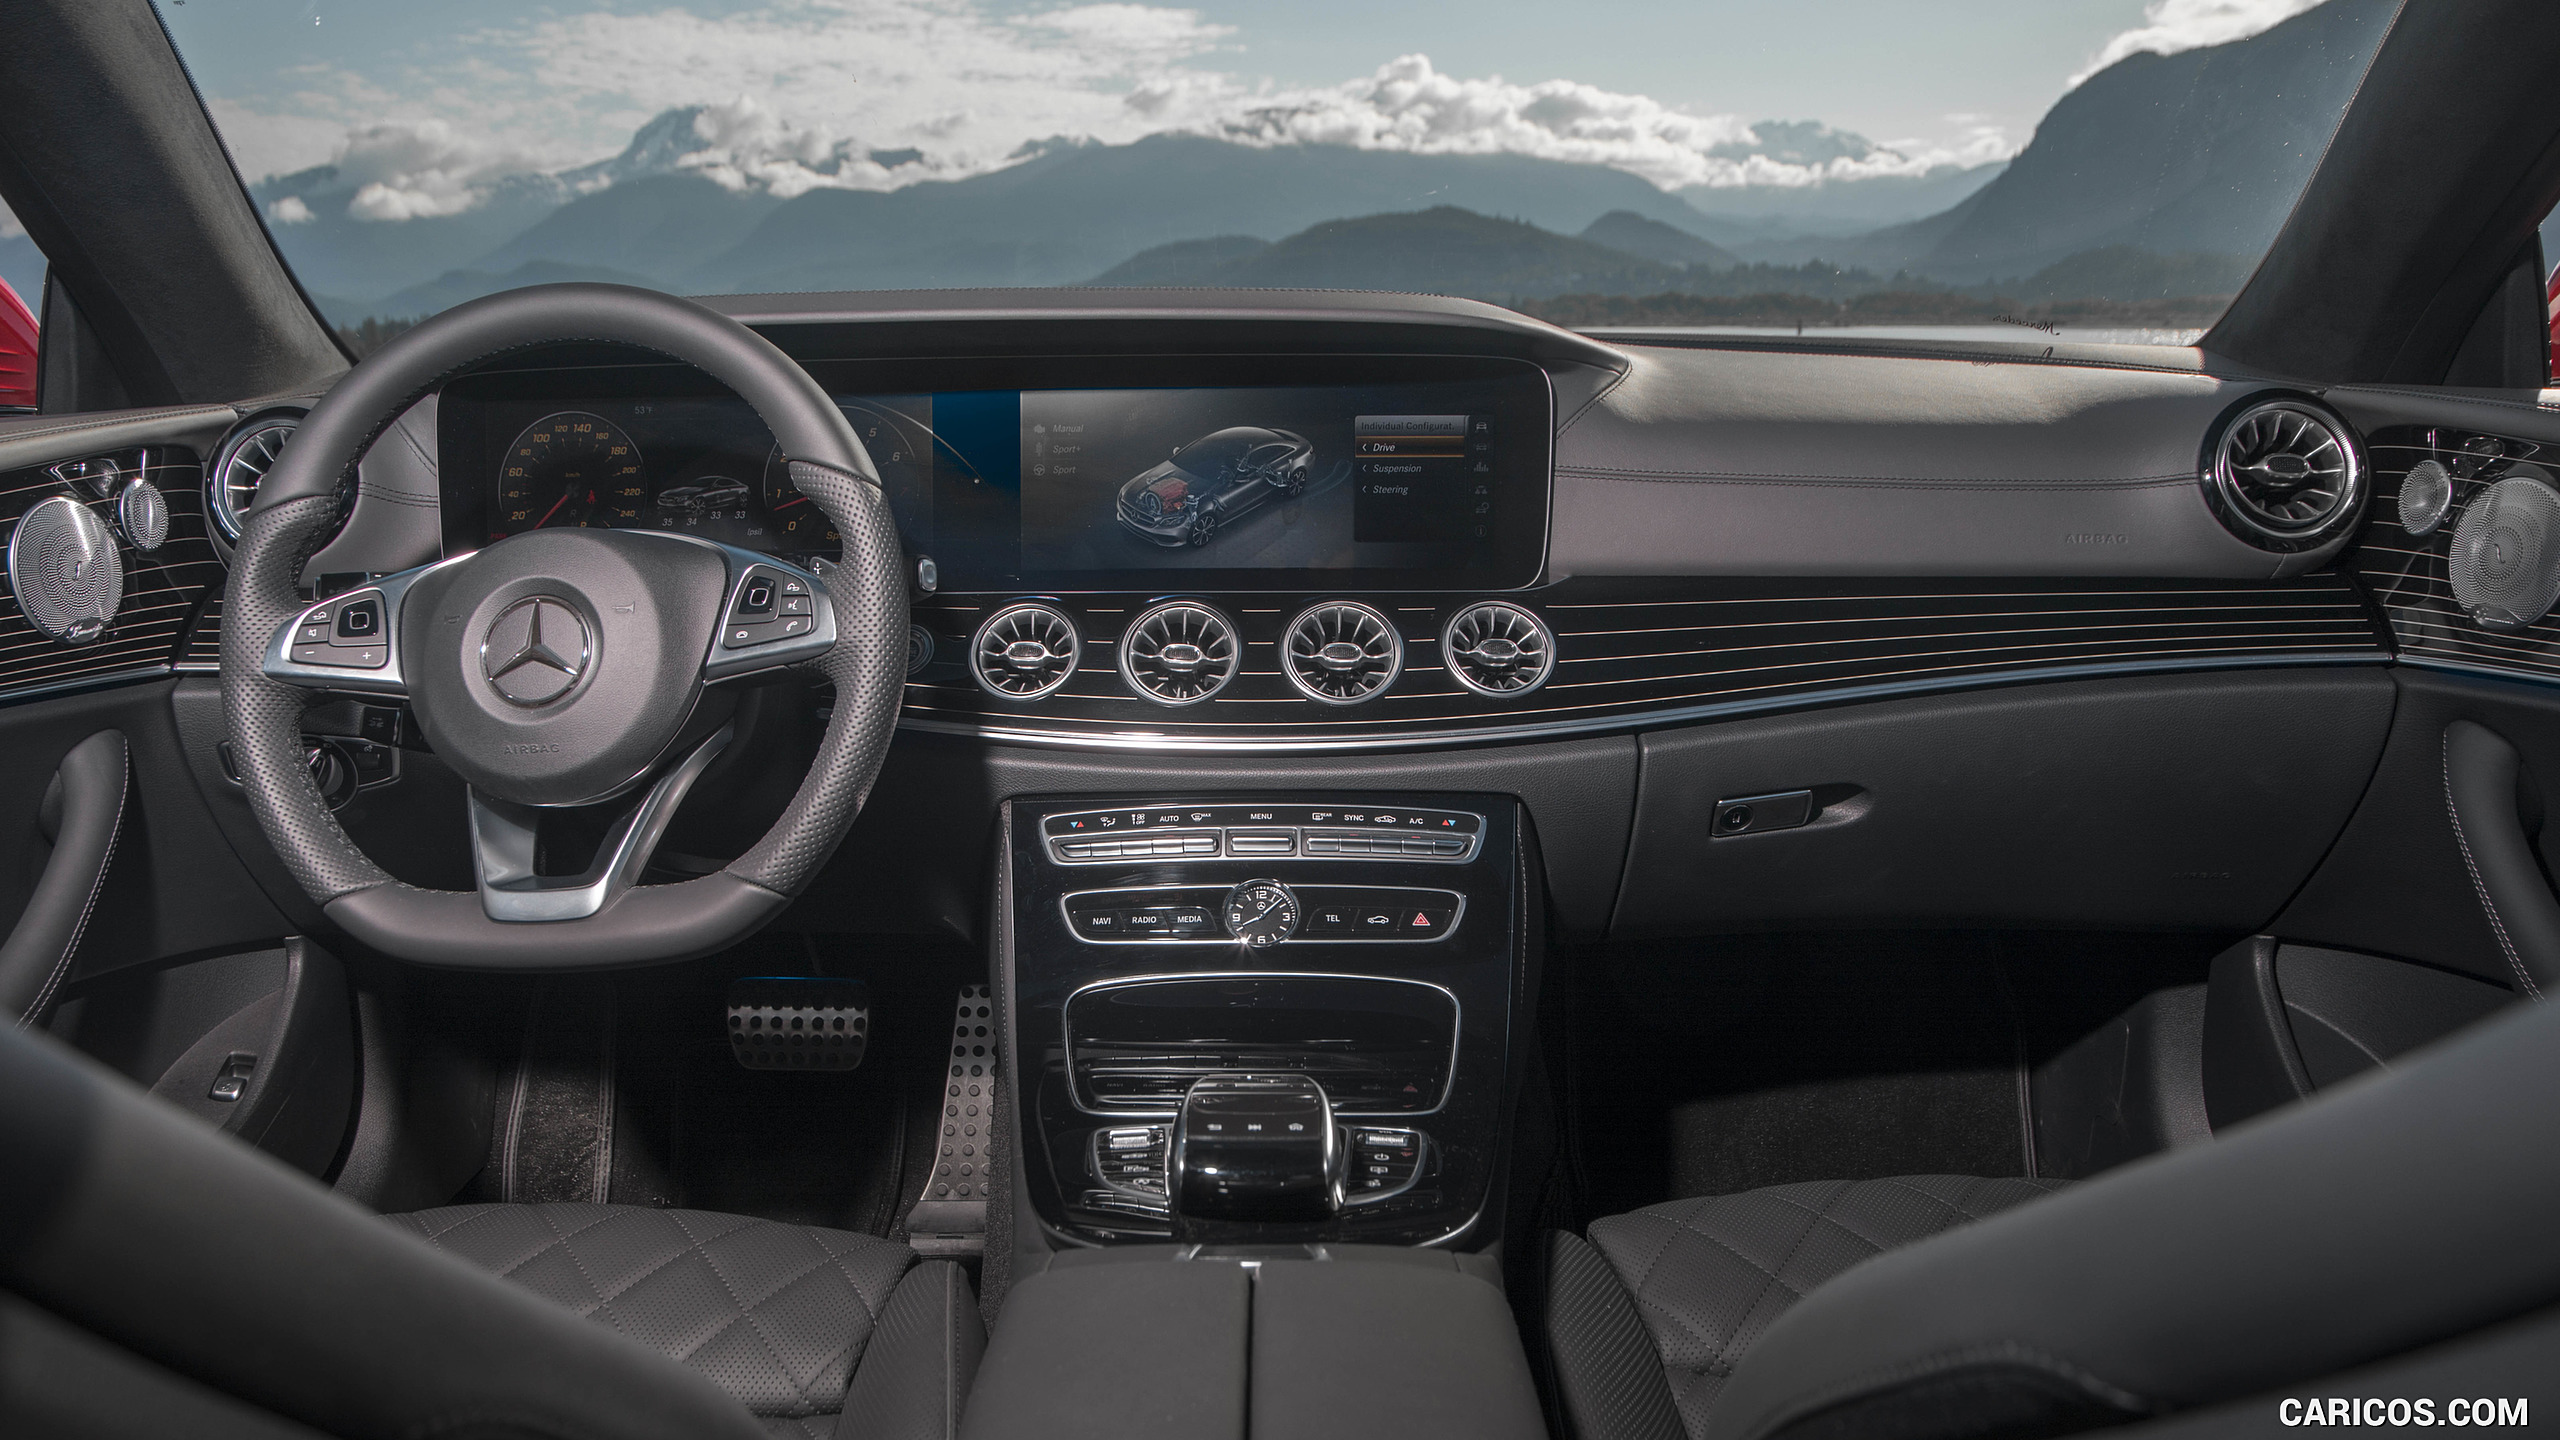 2018 Mercedes-Benz E-Class E400 4MATIC Coupe (US-Spec) - Interior, Cockpit, #295 of 365